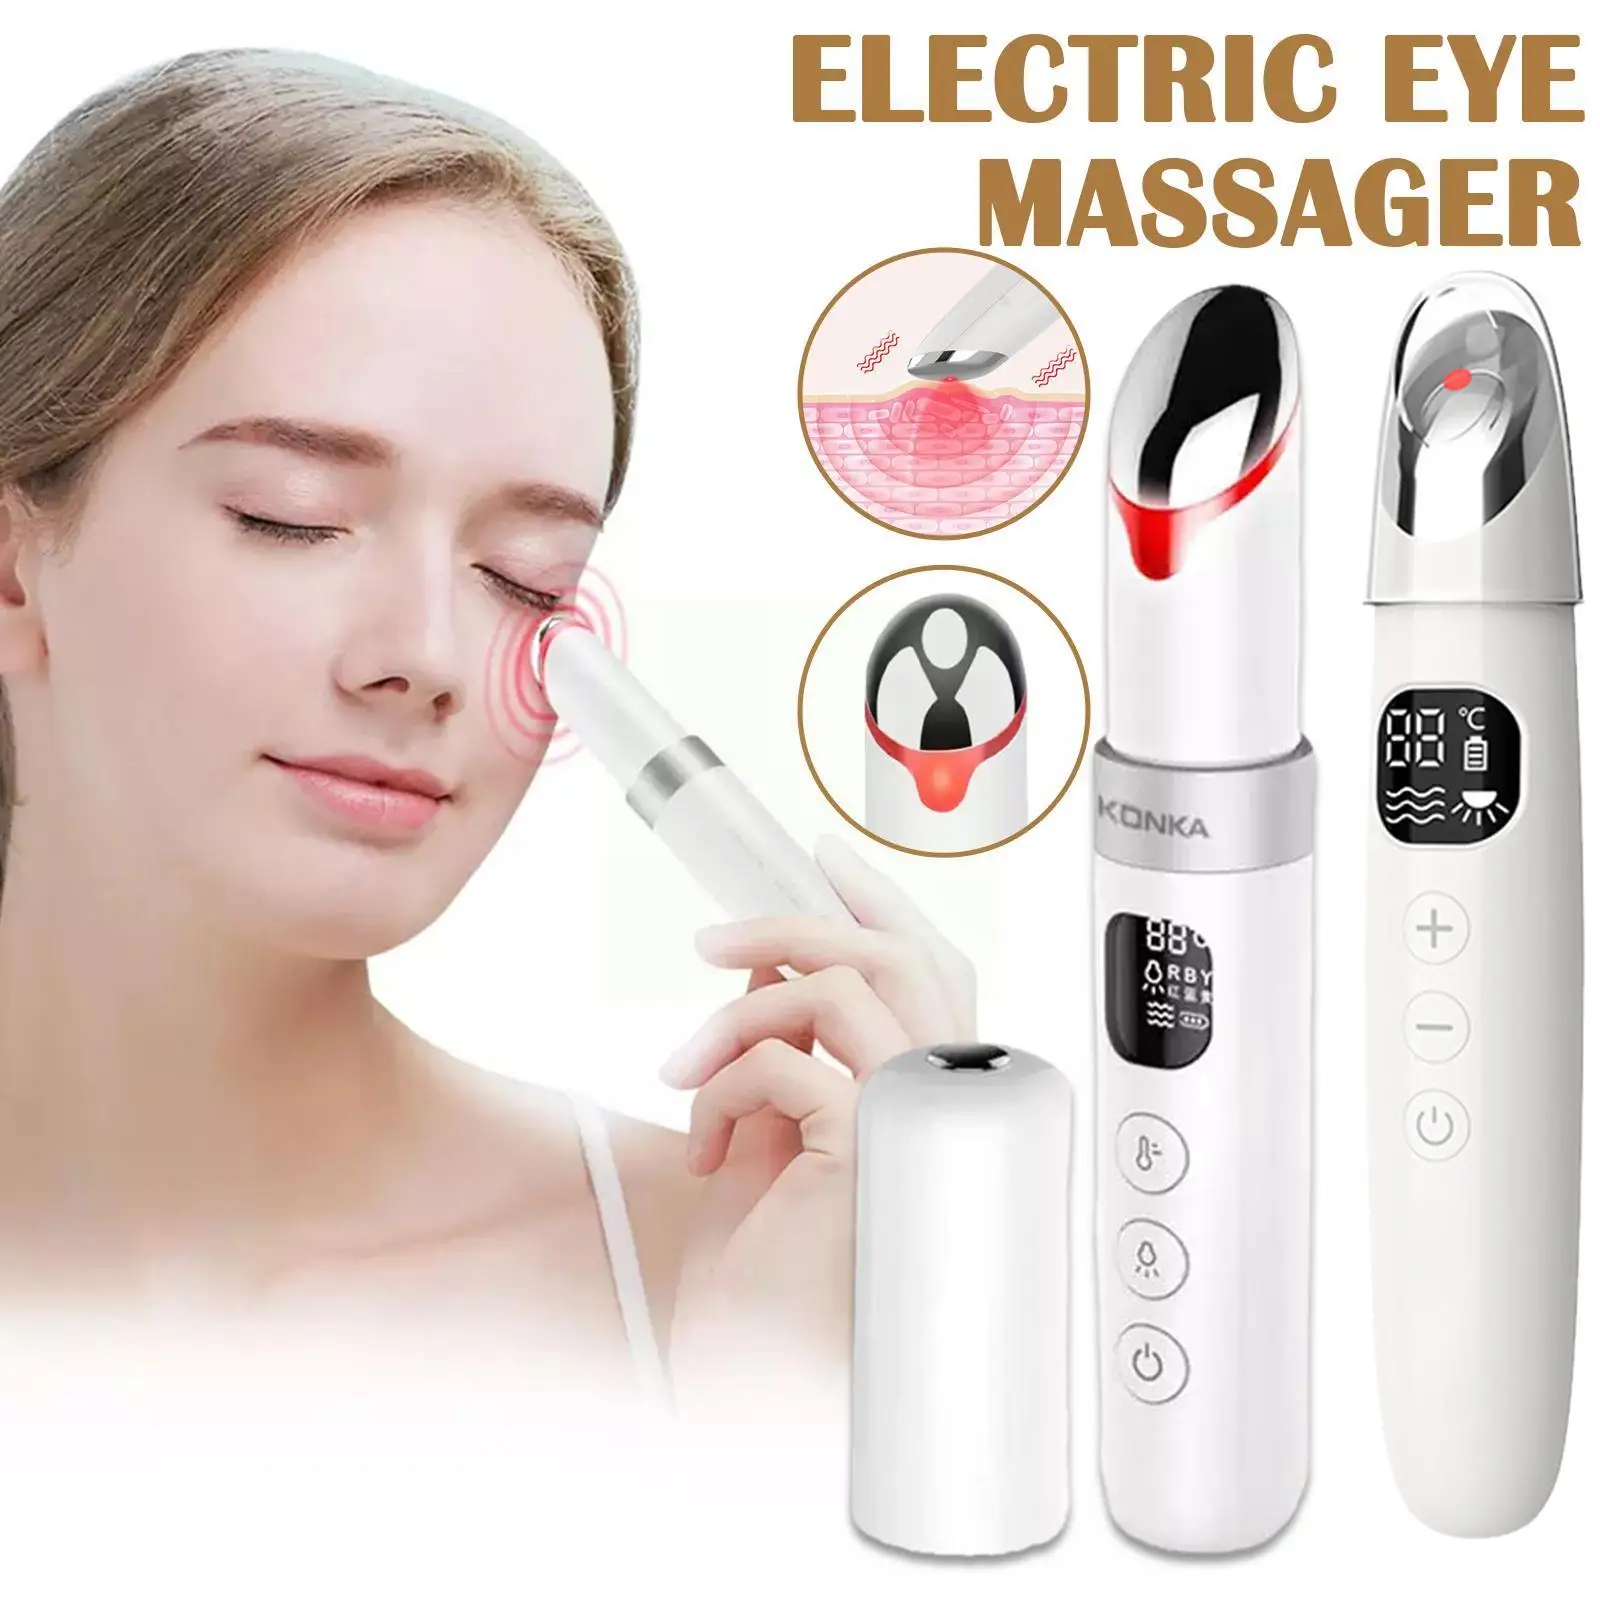 

Electric Eye Massager Eye Skin Lift Anti Age Wrinkle Skin Tool Relax Care Face Wrinkle Hot Beauty Anti Vibration Massage Ma Y3e5